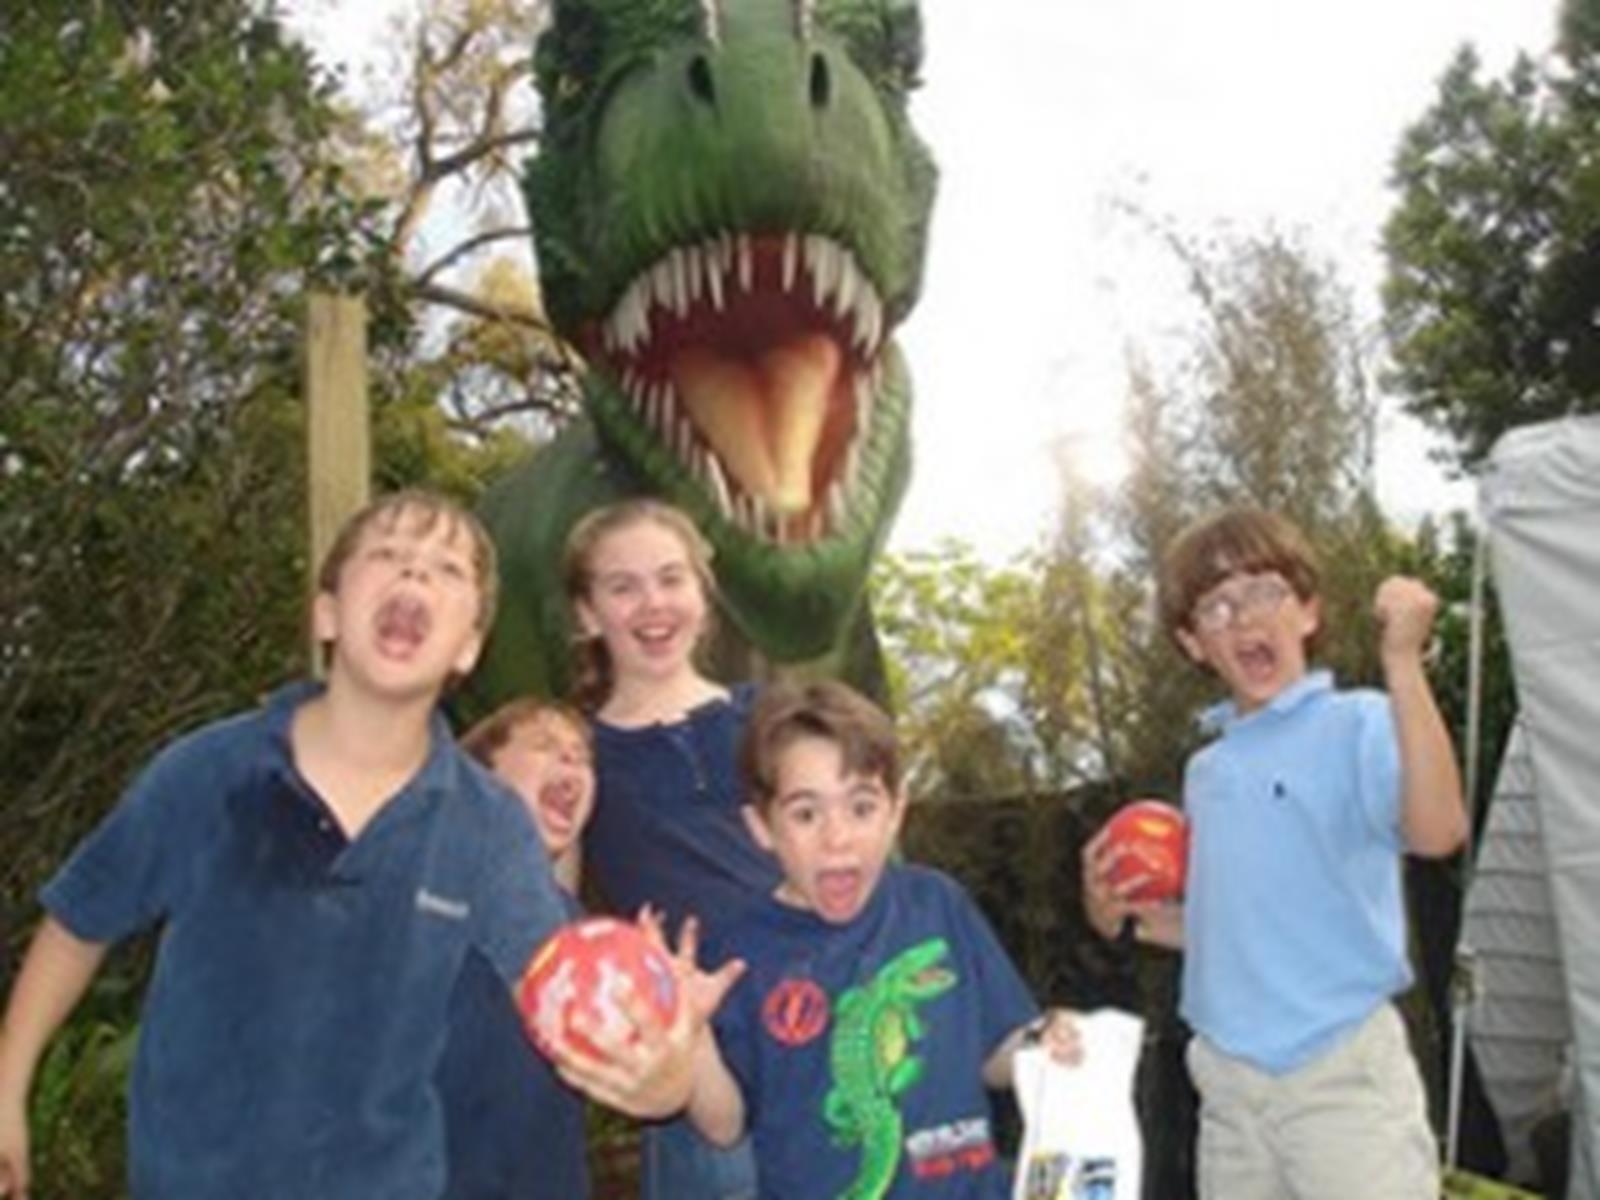 Young School Kids at Audubon Zoo's Dinosaur Adventure. (Photo Courtesy of Michele McGovern & AudubonInstitute.org)